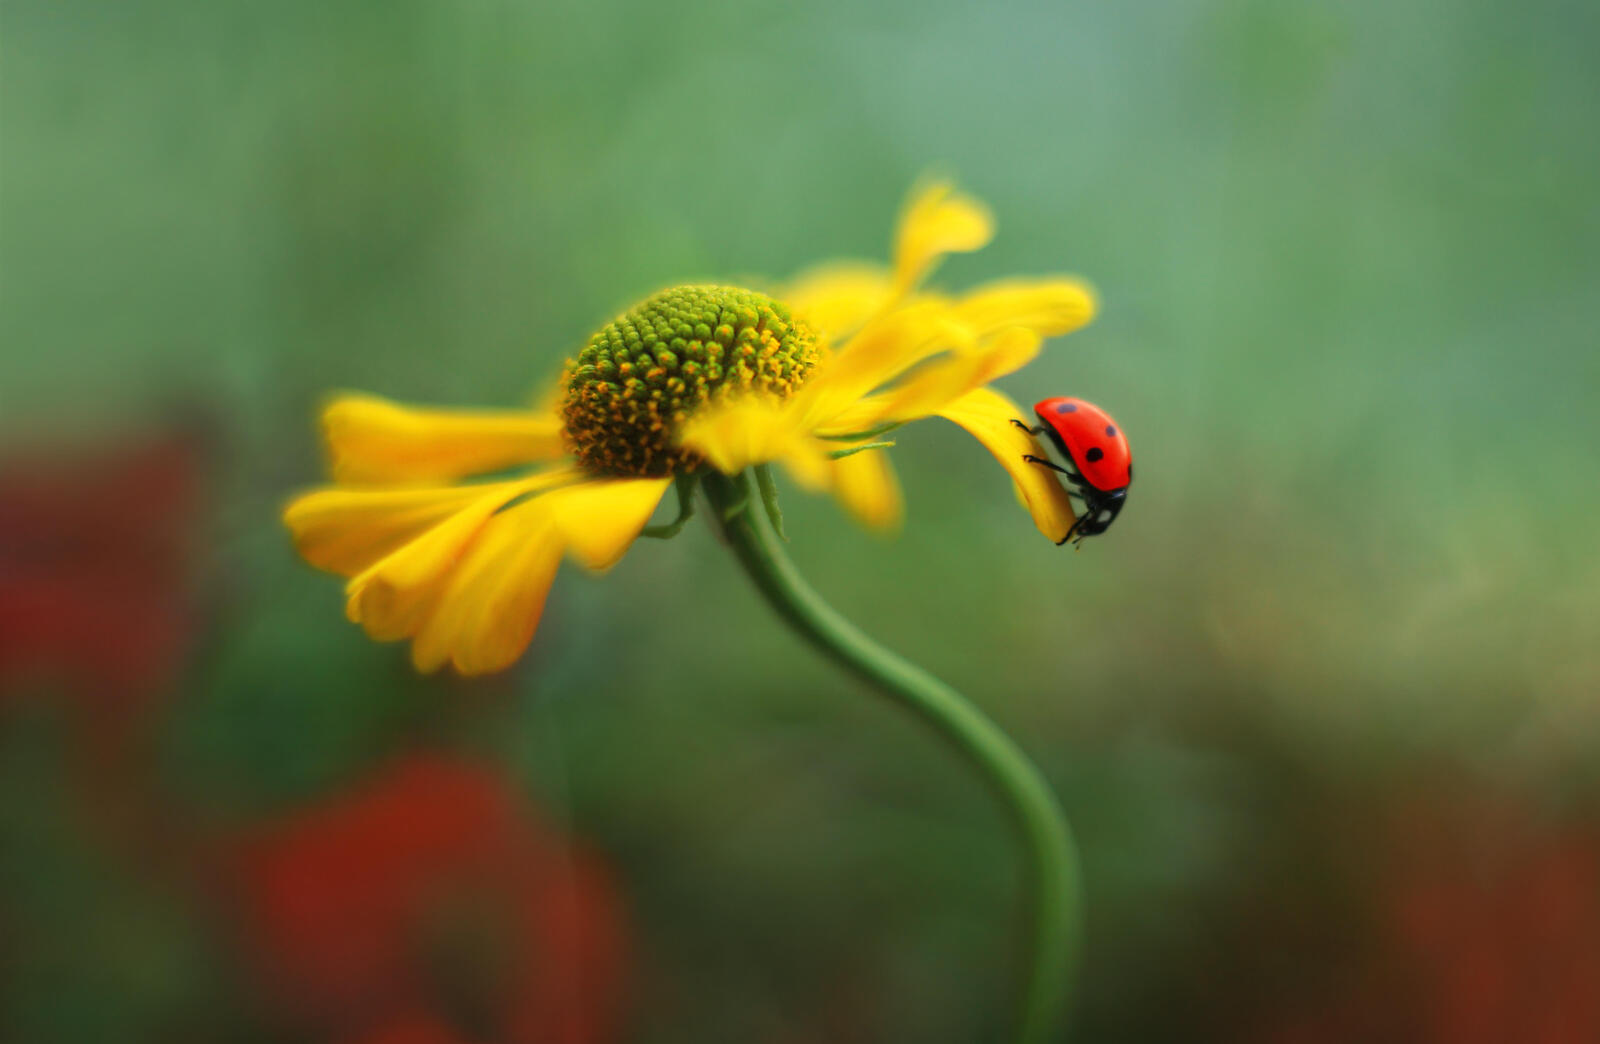 Wallpapers ladybug close-up flower on the desktop